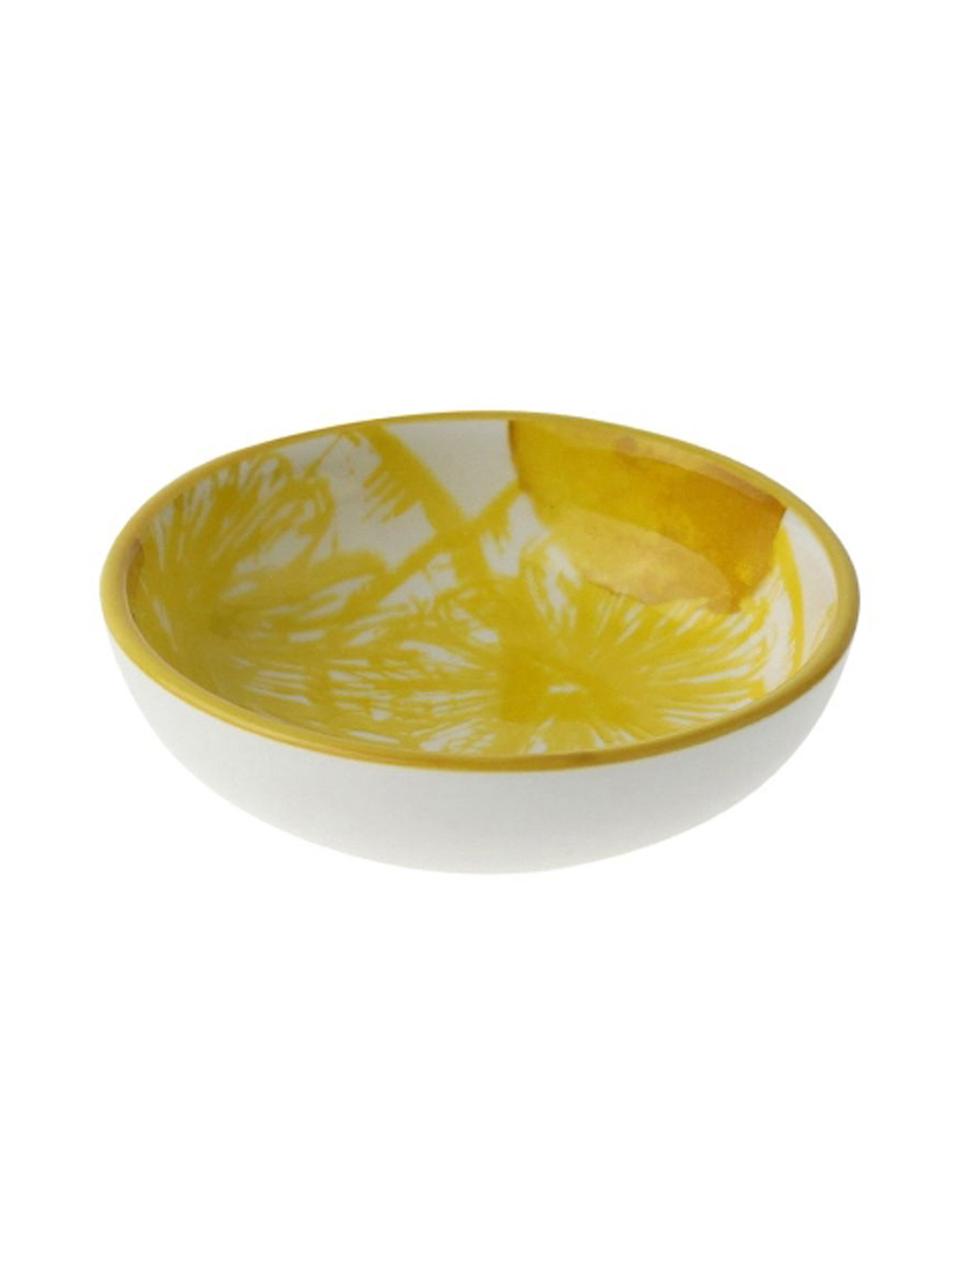 Dipschalen Lemon mit Zitronen-Motiv, 2 Stück, Porzellan, Weiß, Gelb, Ø 9 x H 3 cm